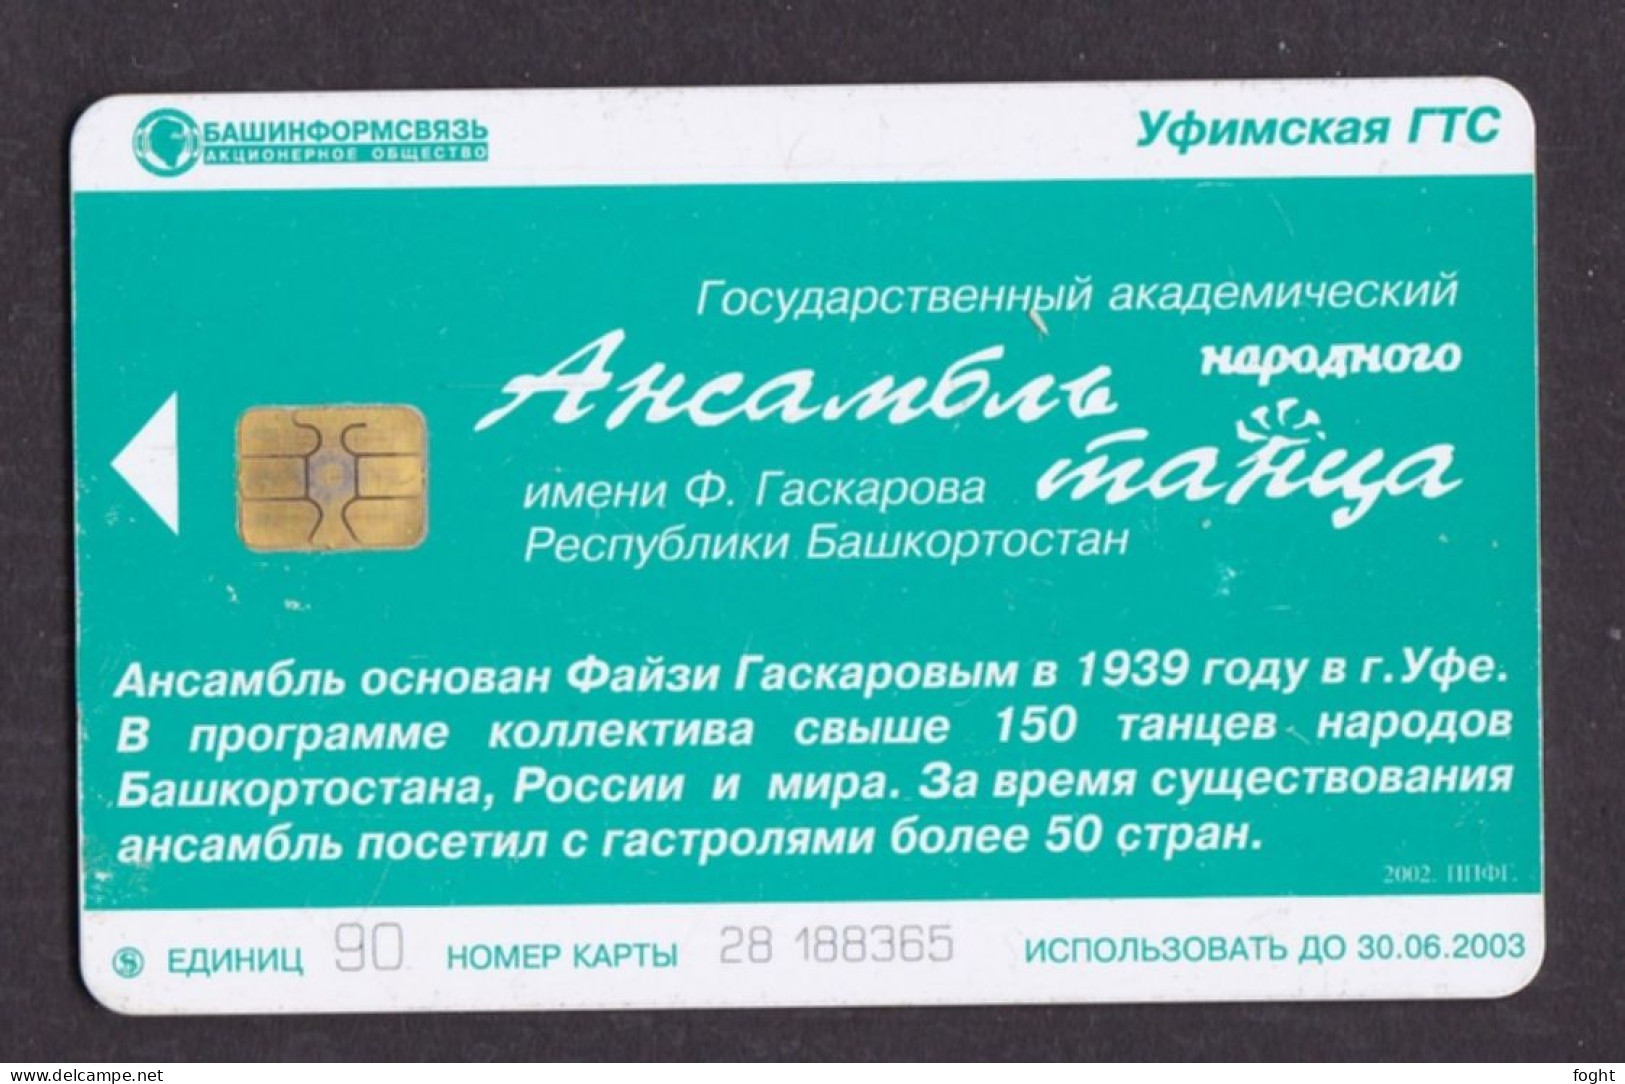 2002 Russia Bashinformsvyaz-Ufa,Tatar Dance "Bridegroom",90 Units Card,Col:RU-BIS-V-006 - Rusland